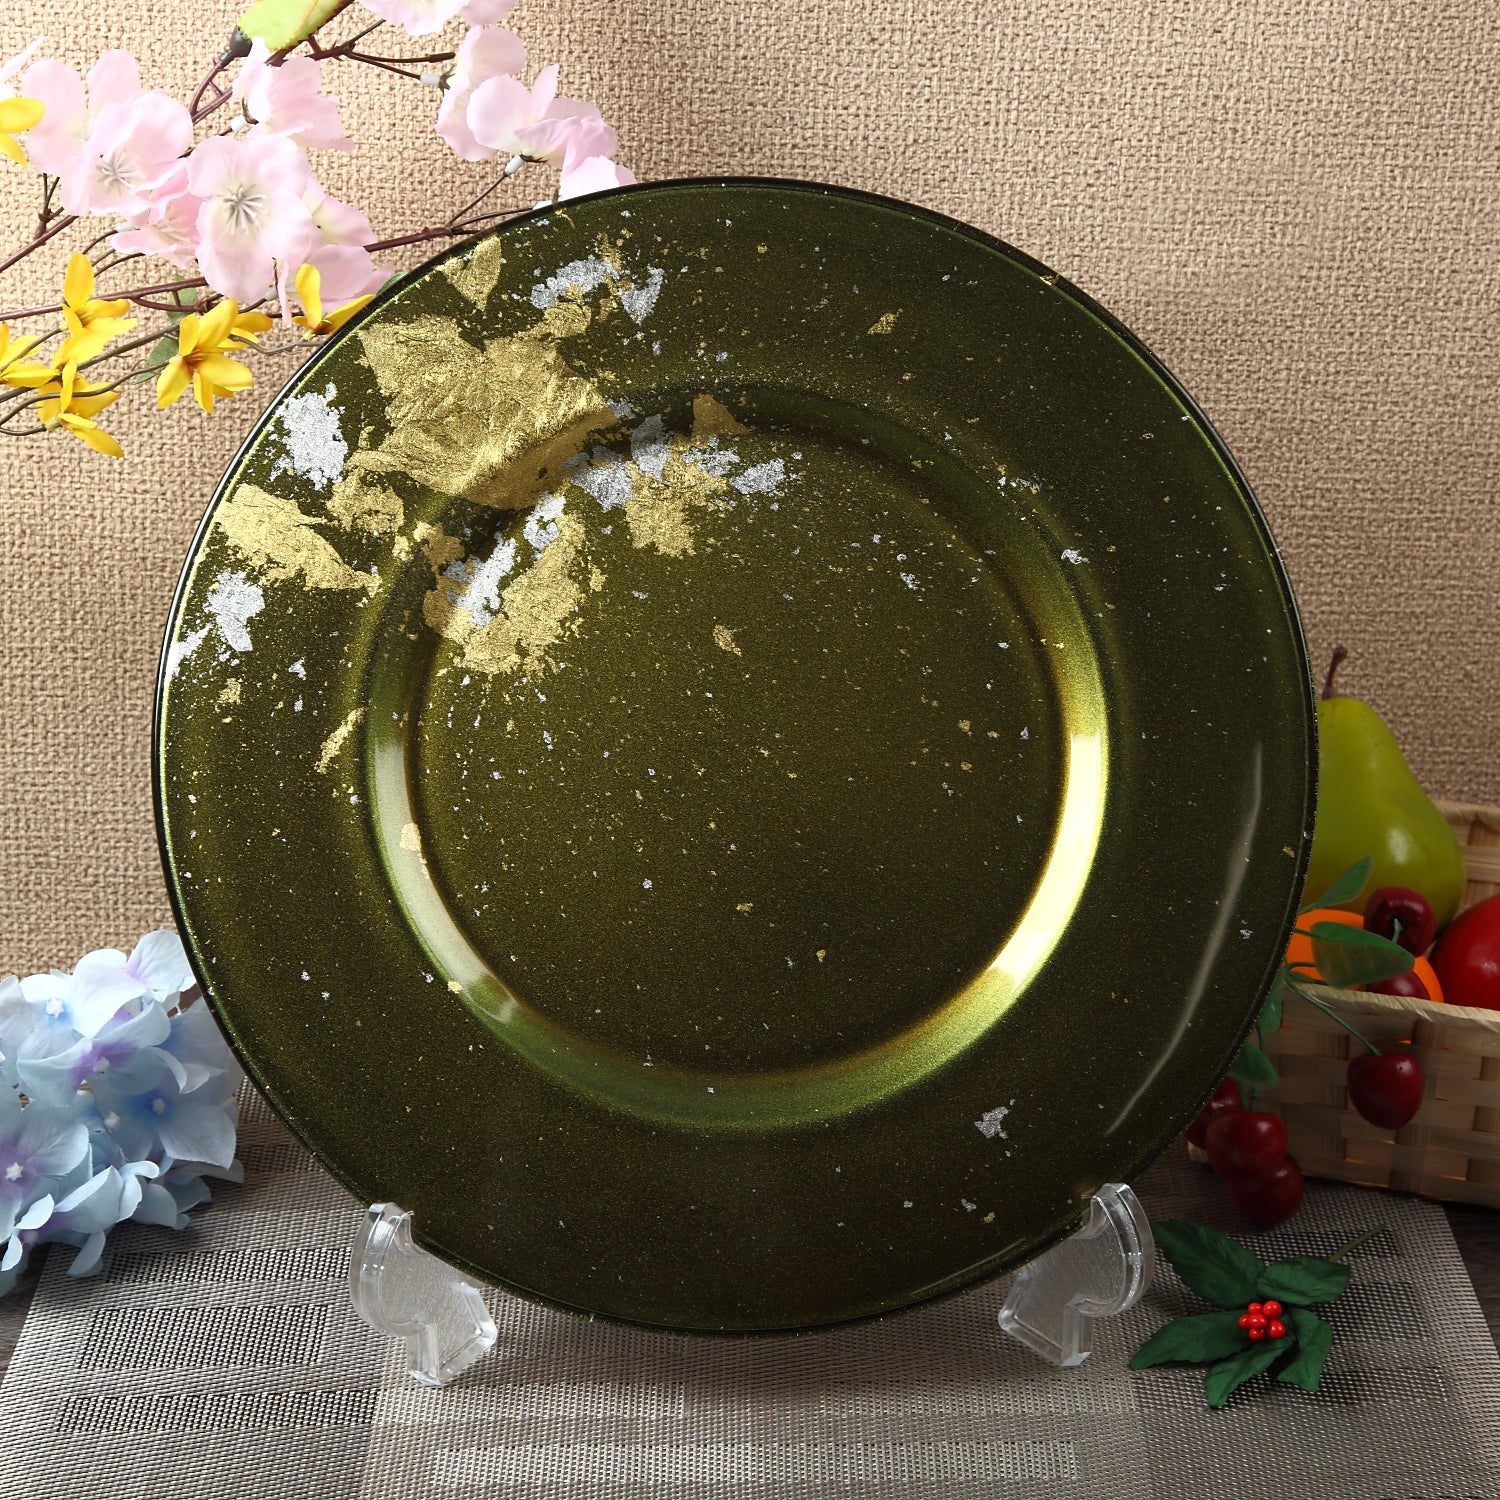 Syosaku Japanese Urushi Glass Charger Plate 13.9-inch (35cm) Majestic Green with Gold Leaf, Dishwasher Safe - Syosaku-Japan